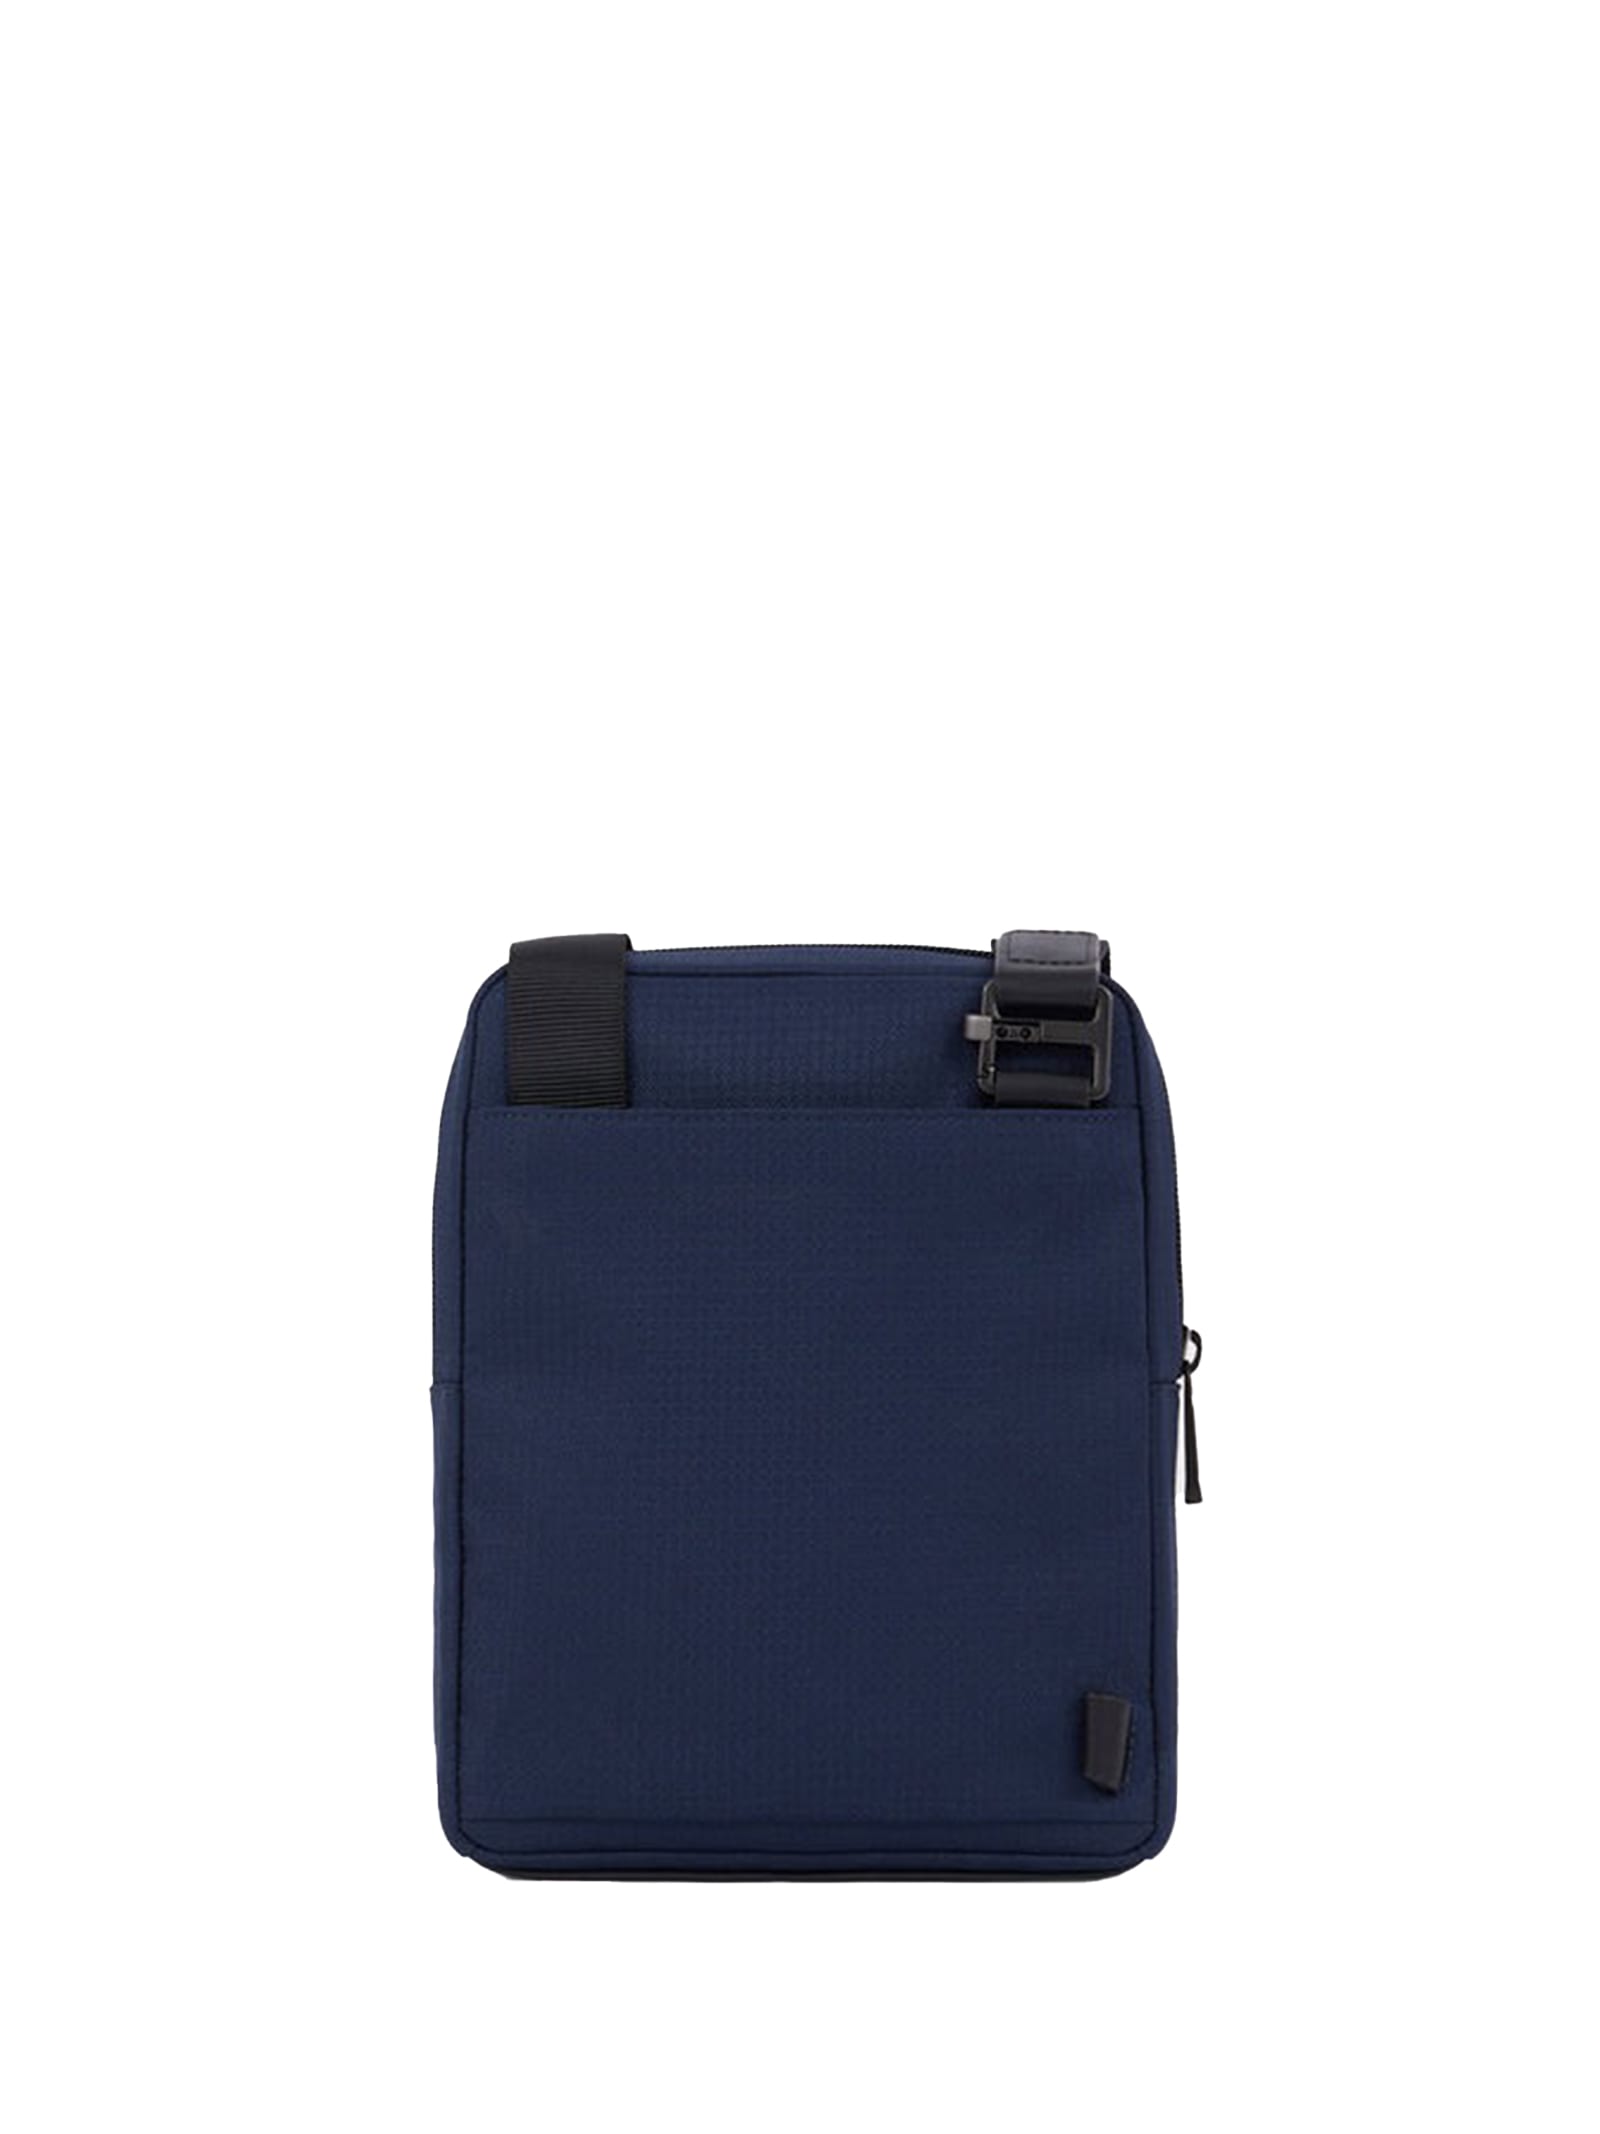 Shop Piquadro Ipad Holder Bag Blue